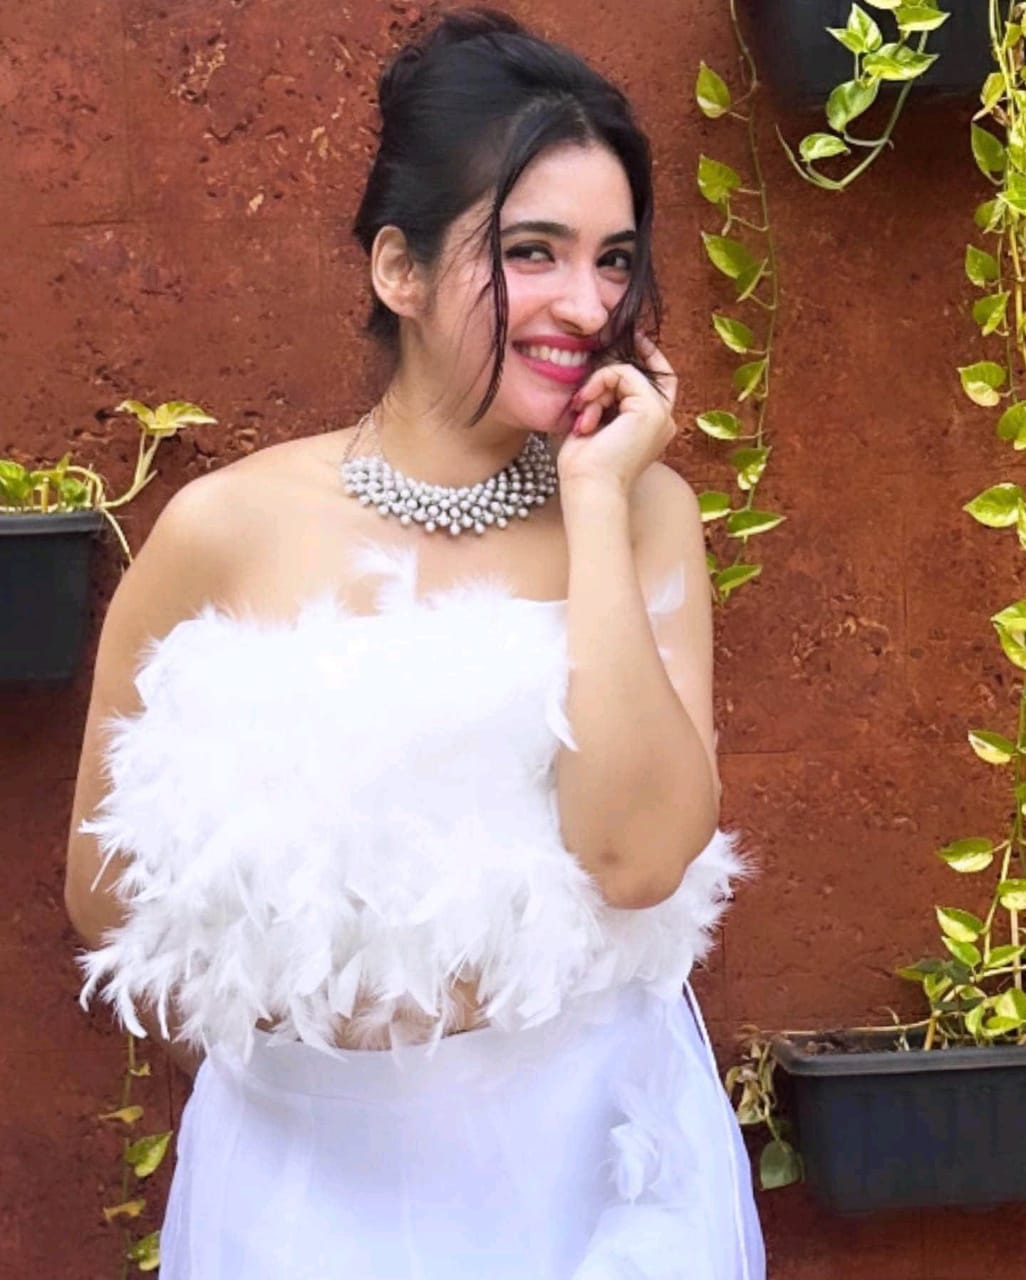 Rathika Rose photos in white dress went viral